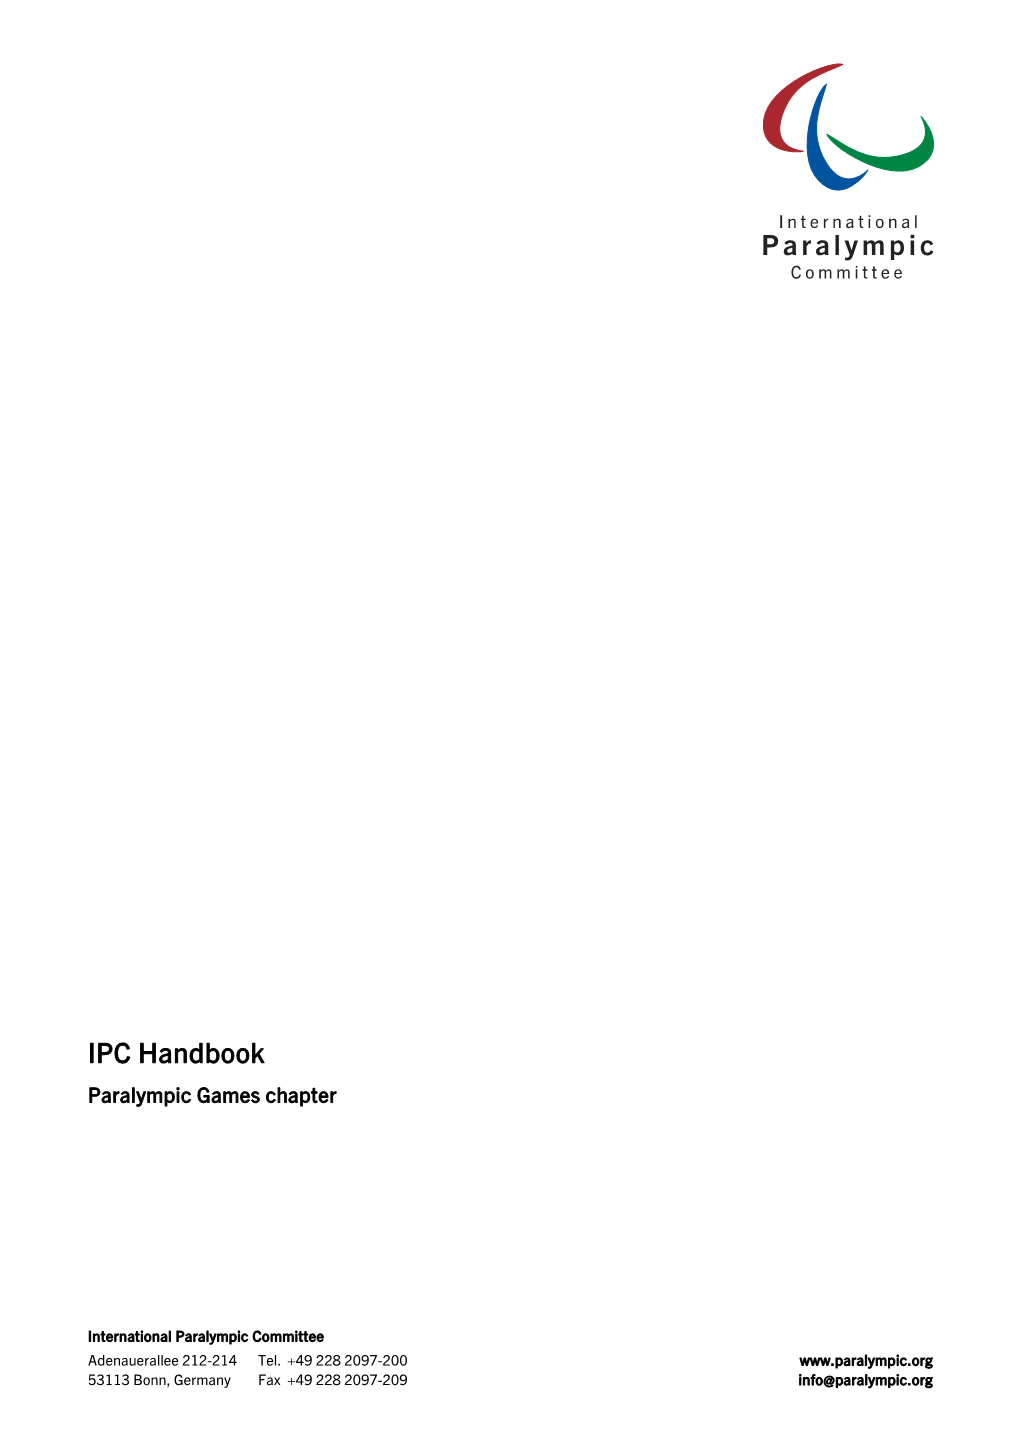 IPC Handbook Paralympic Games Chapter